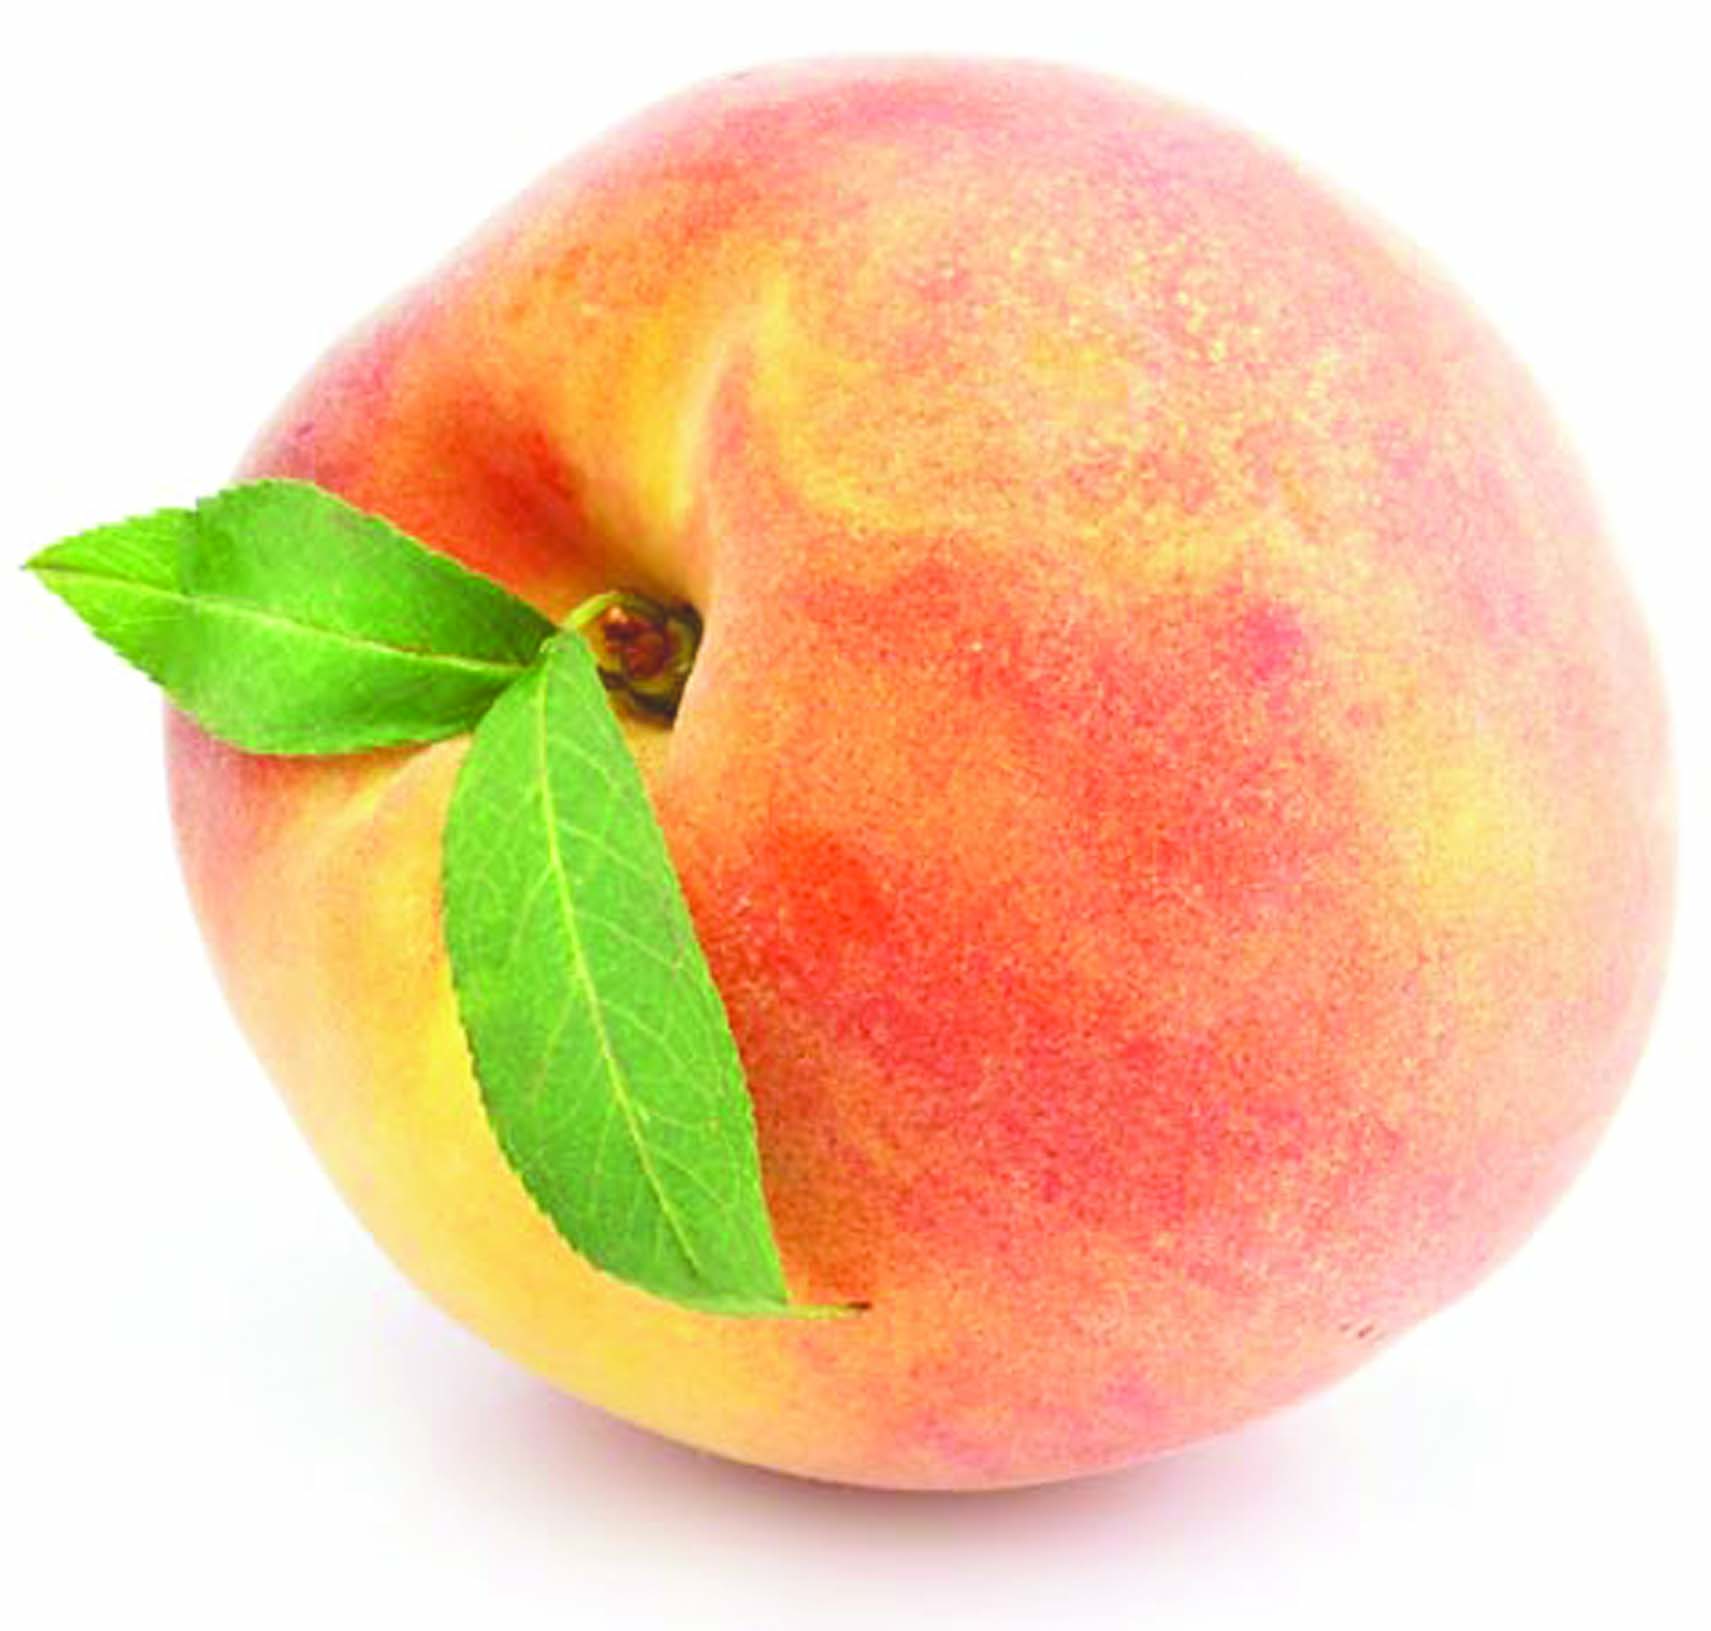 Peaches Restaurant Earns Worldwide Salute For 50 Years On Farish